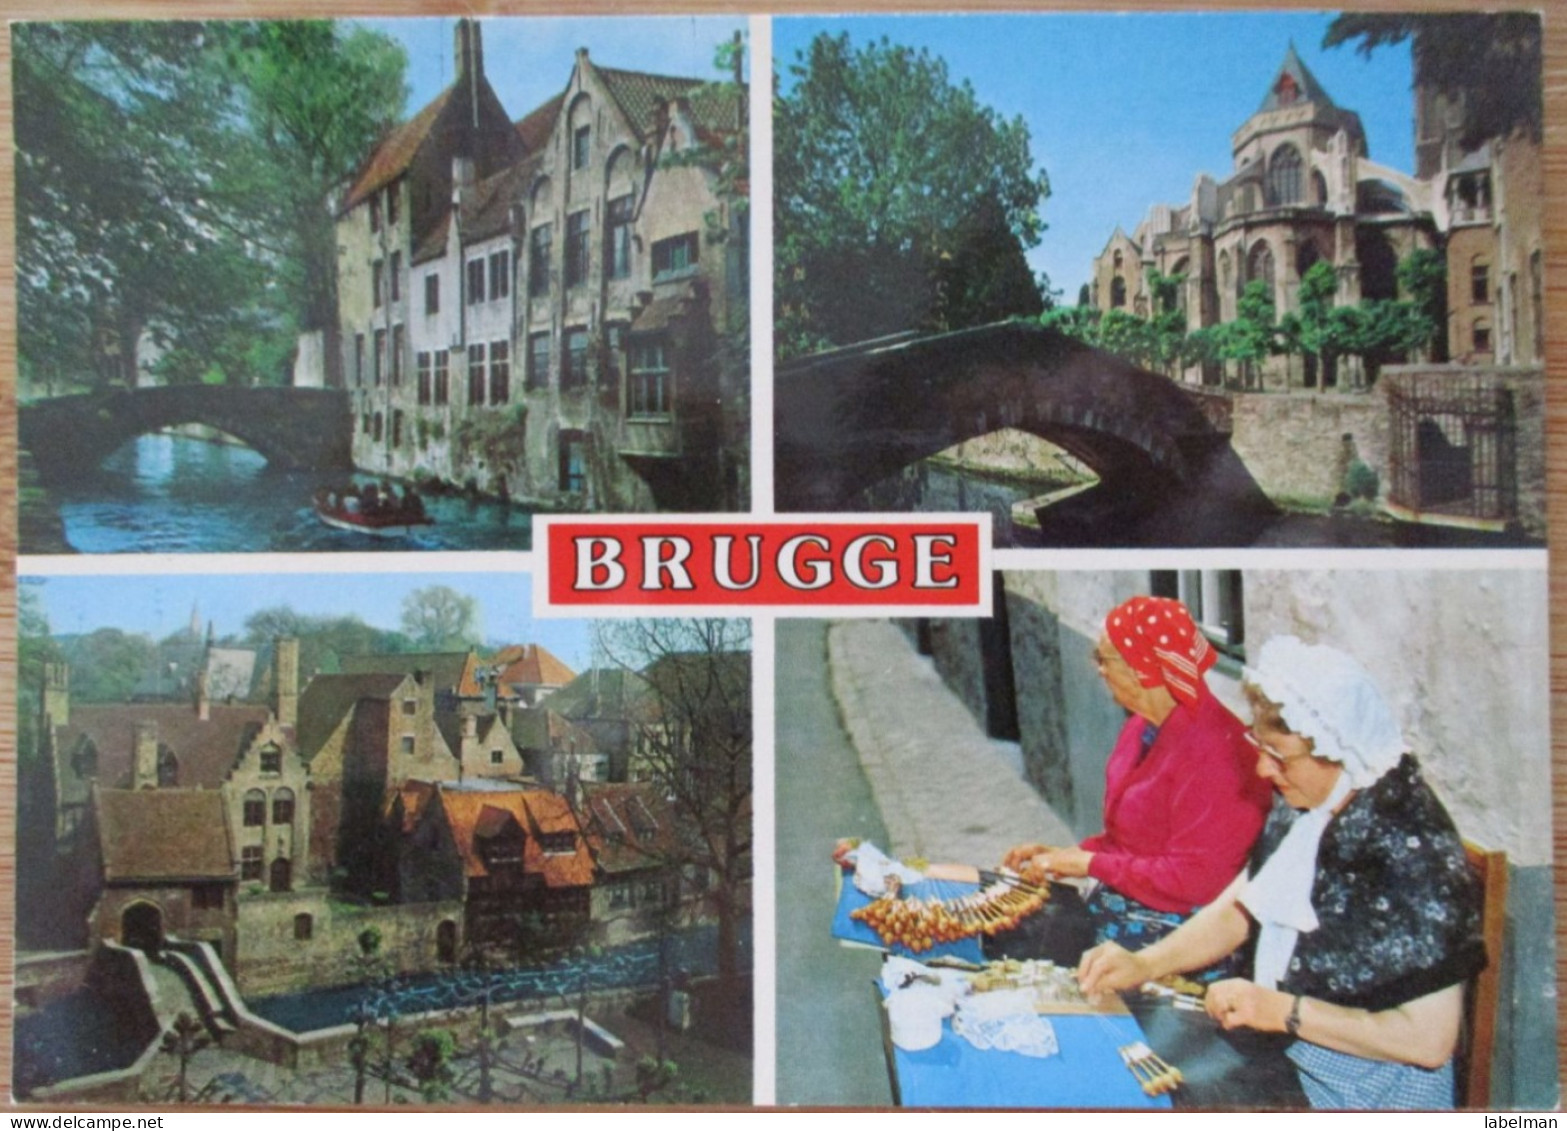 BELGIUM BELGIQUE BRUGGE LACE CENTER CANAL BRIDGE POSTCARD CARTE POSTALE ANSICHTSKARTE CARTOLINA POSTKARTE CARD KARTE - Antwerpen